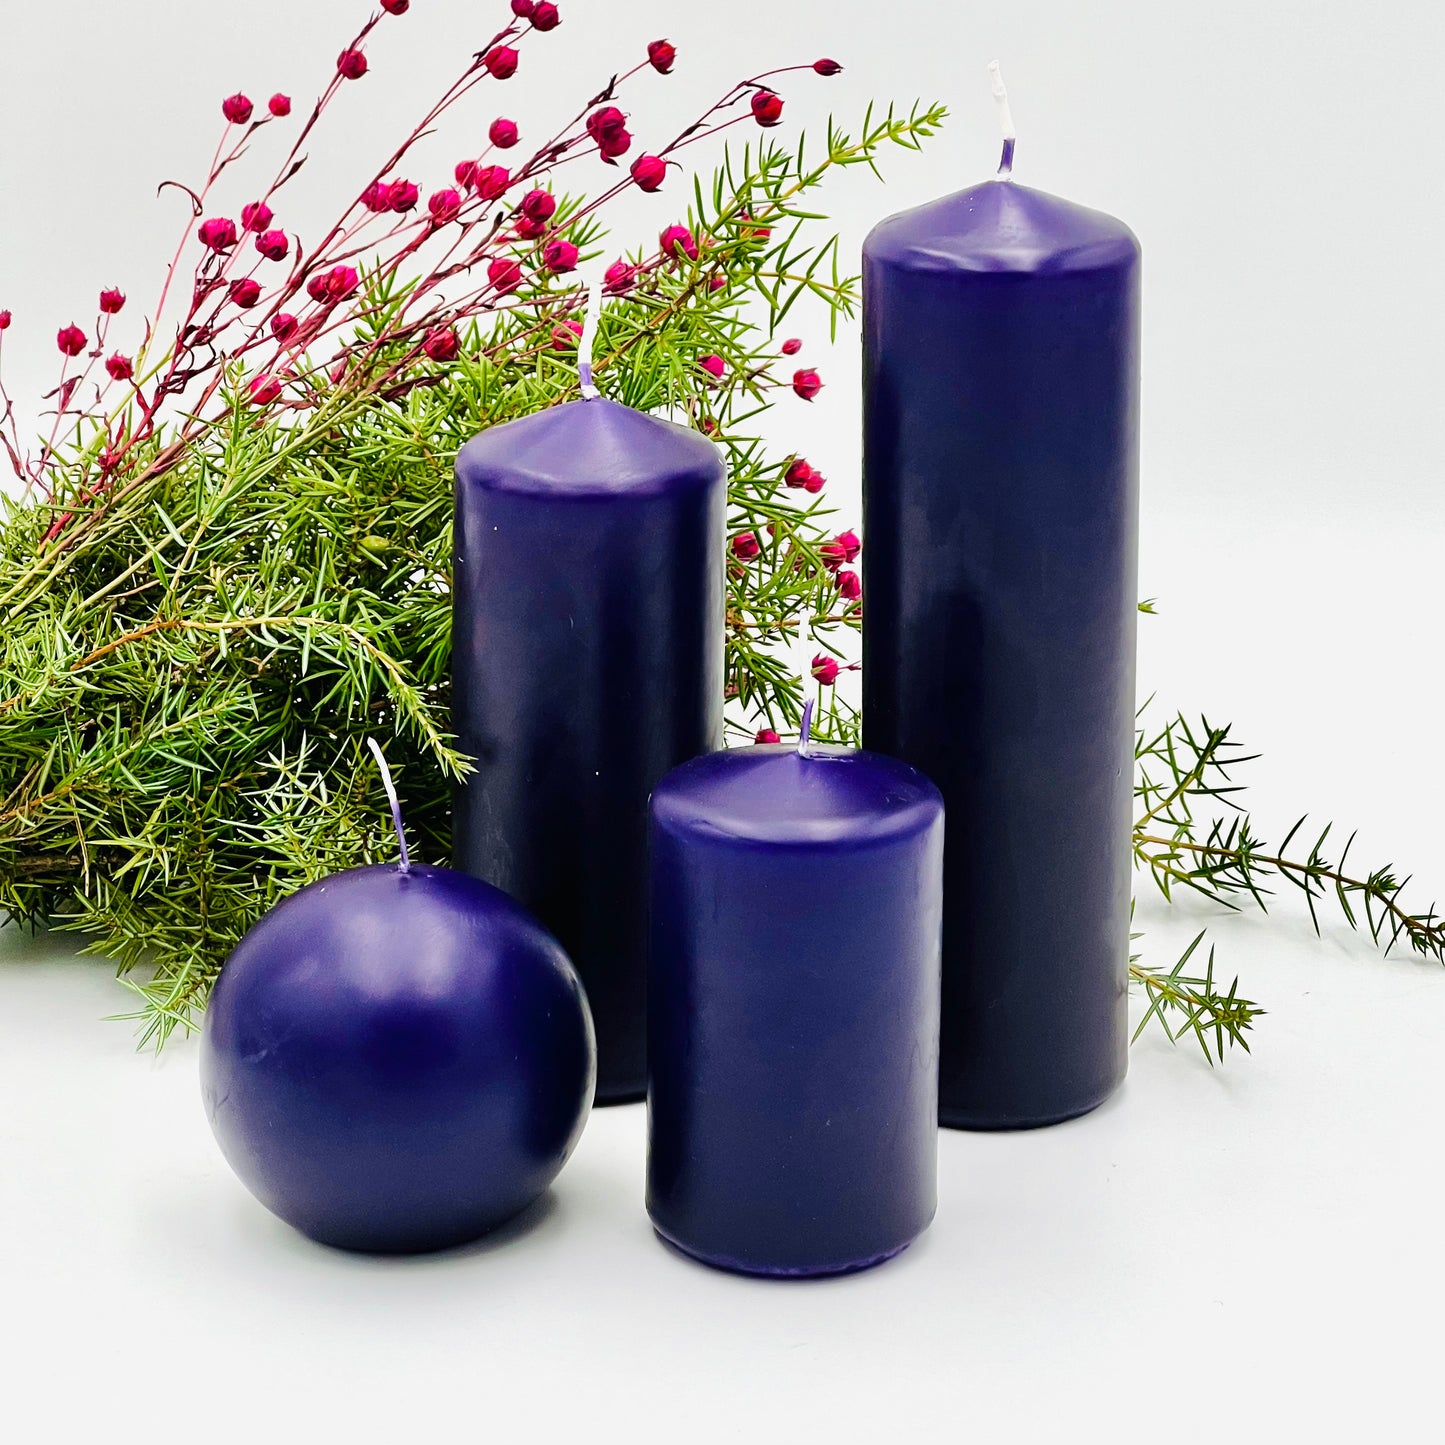 Advent candle set "Dark purple"